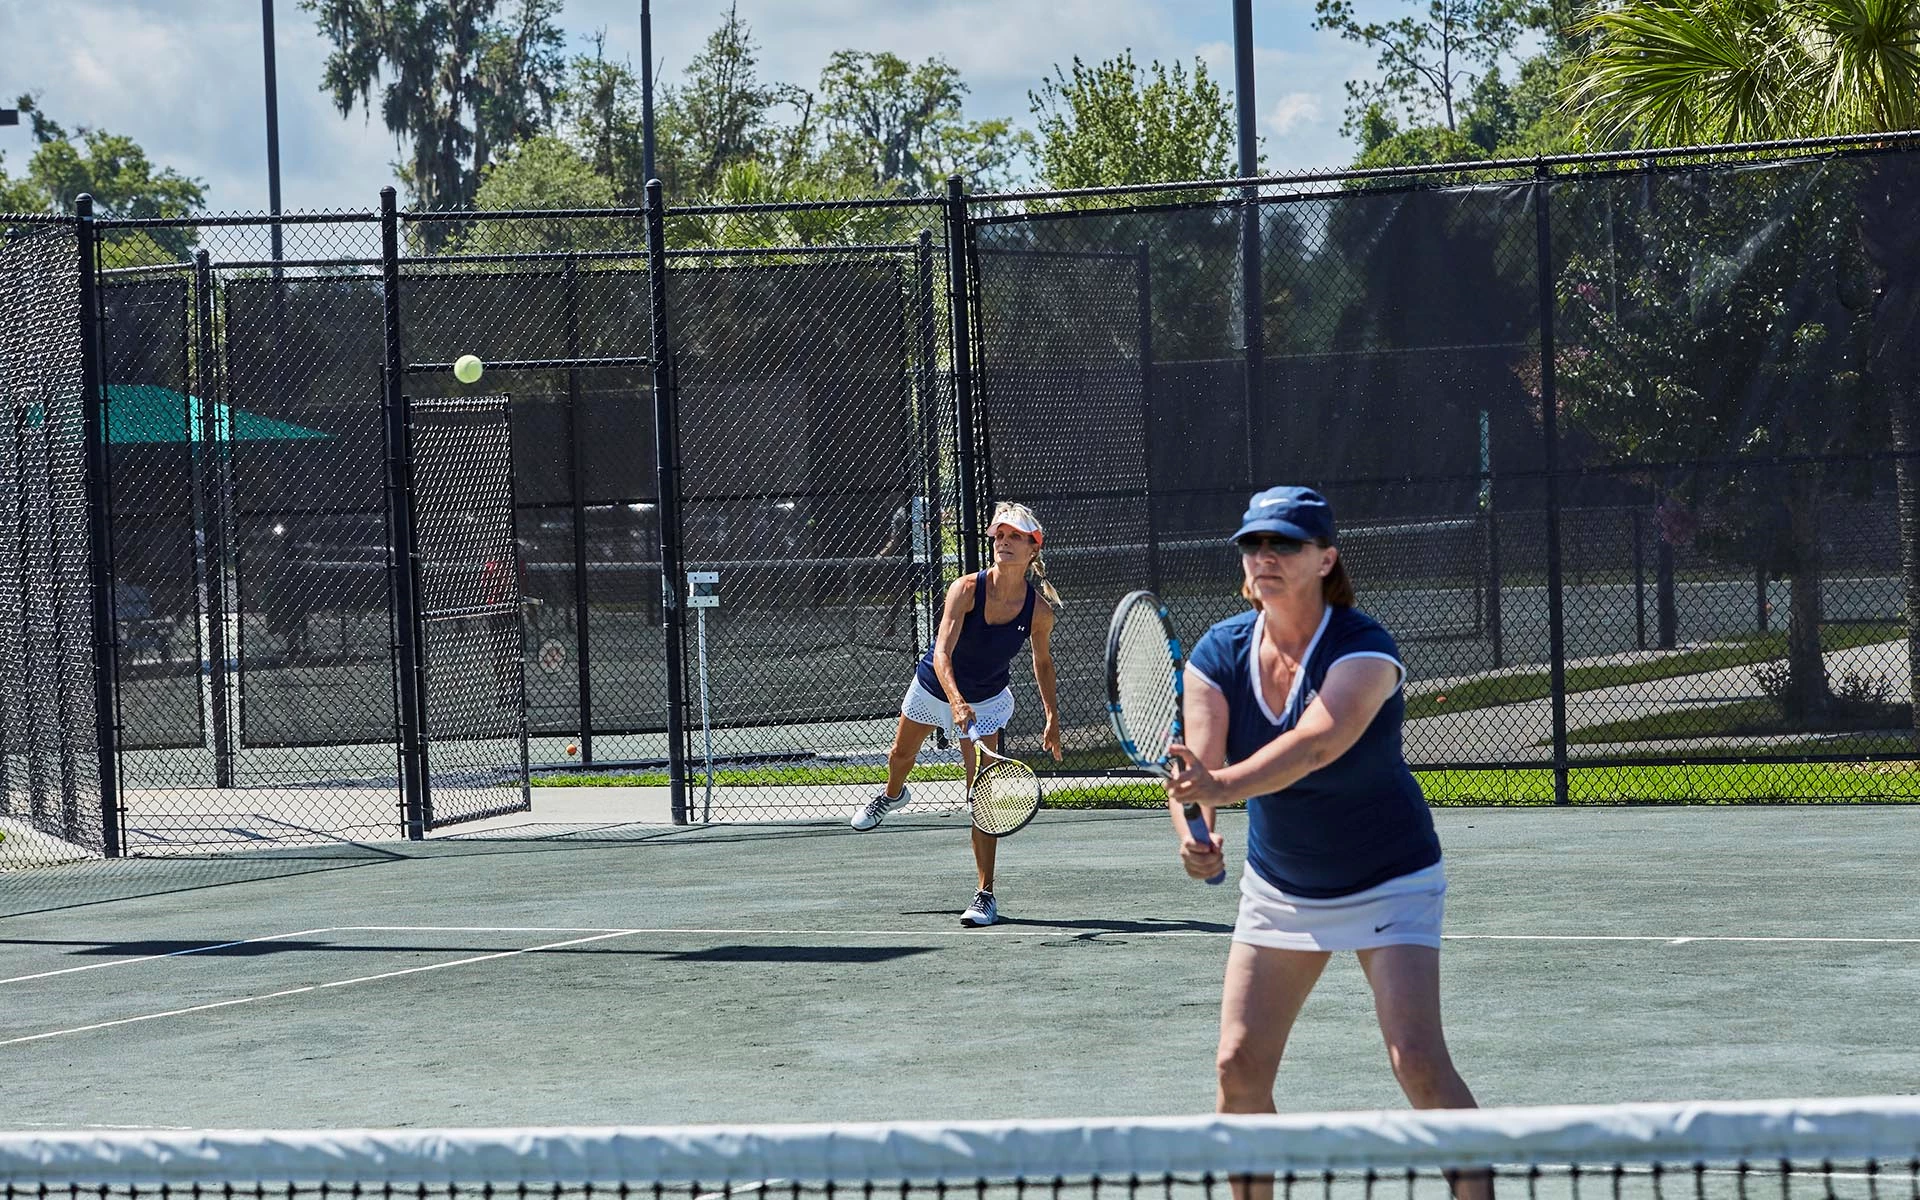 Hawkstone Country Club - Members playing tennis